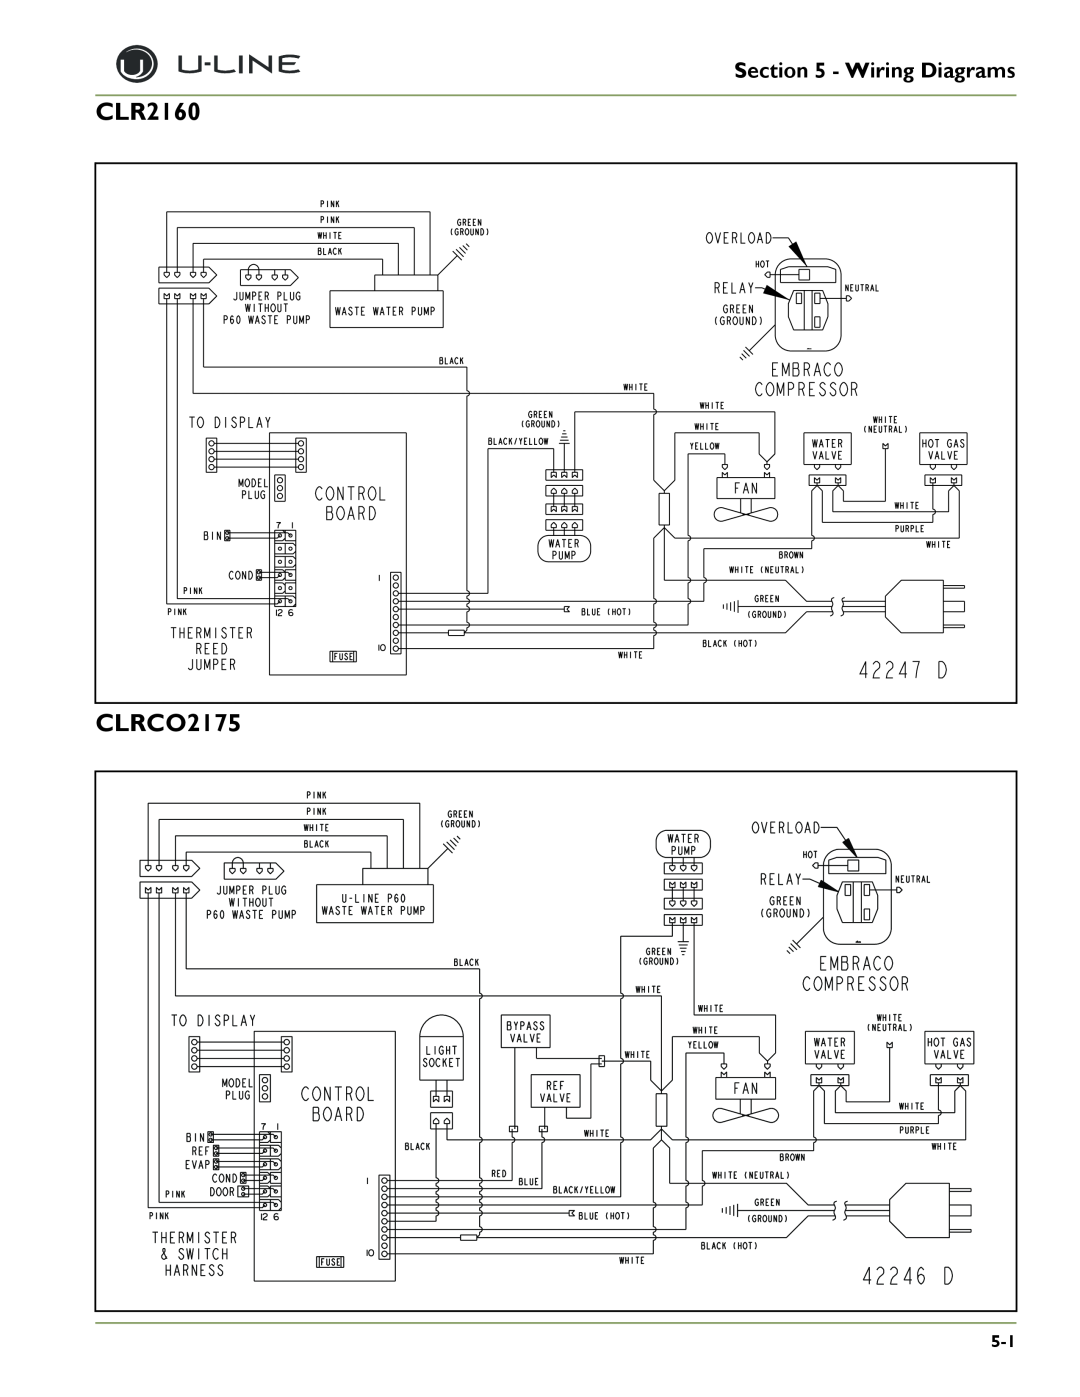 U-Line 2175BEV Wiring Diagrams, CLR2160, CLRCO2175, 42247, Embraco, Compressor, Control, Board, Overload, Relay, Reed 